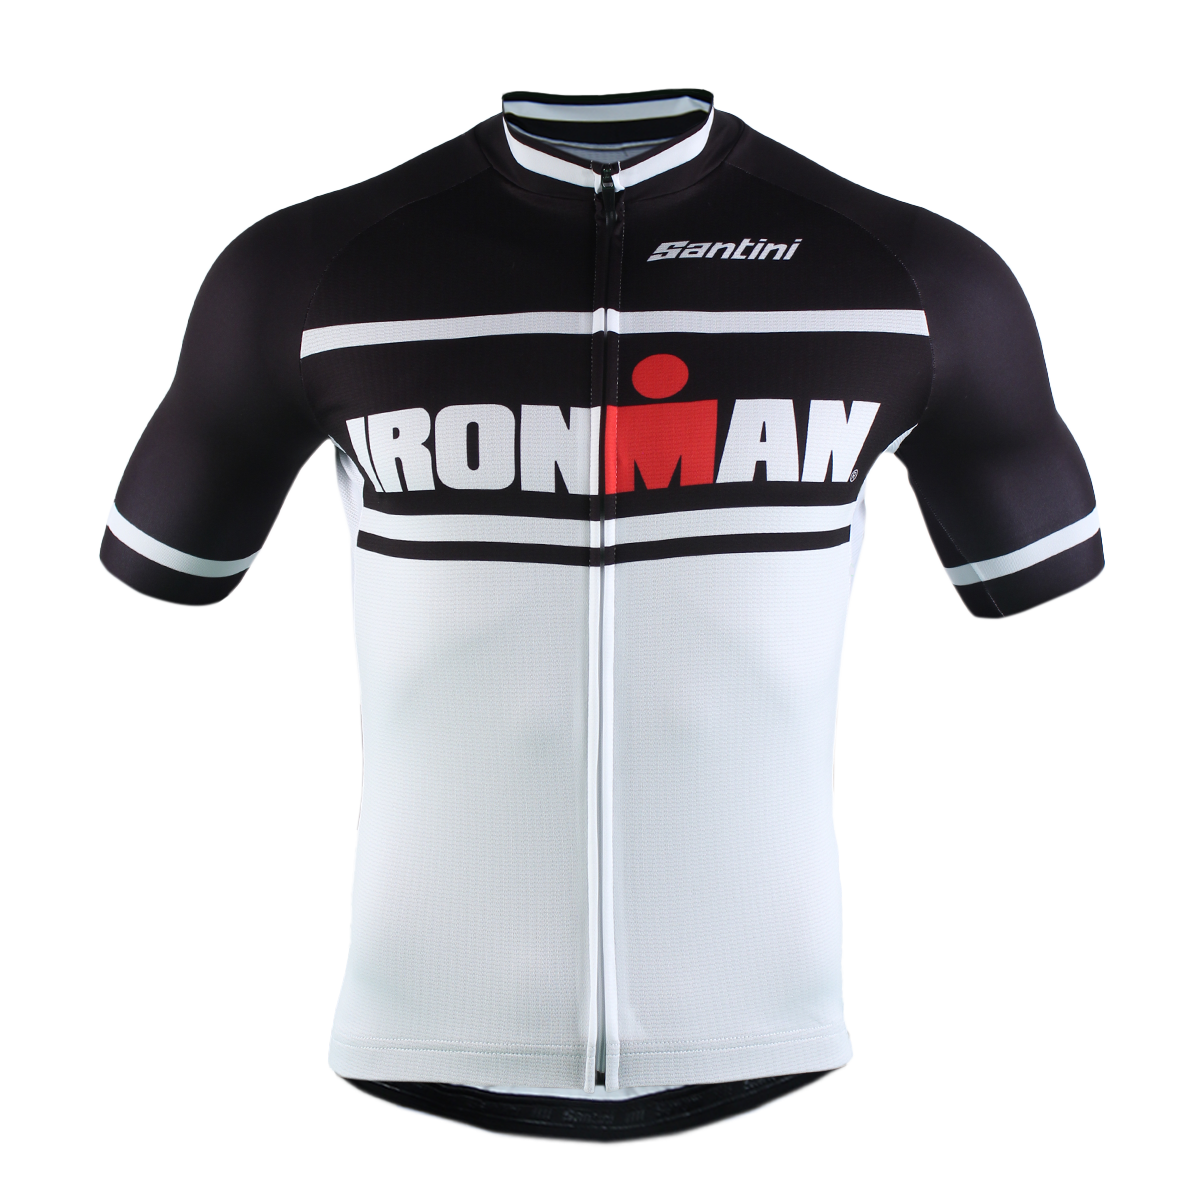 IRONMAN Santini Classic Men's Cycle Jersey - Black/White